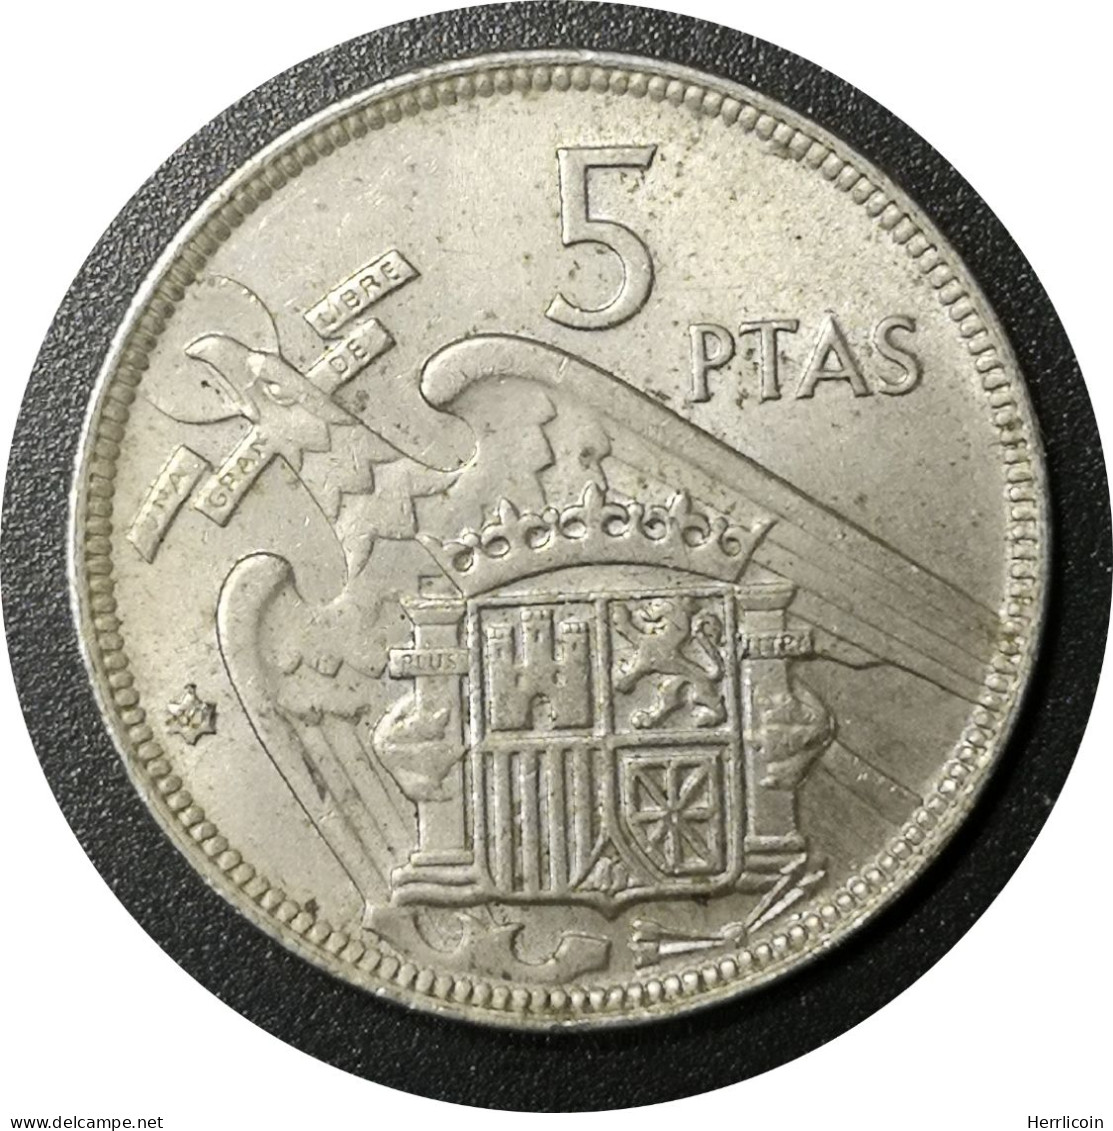 Monnaie Espagne - 1957 (1960) - 5 Pesetas Franco - 5 Pesetas